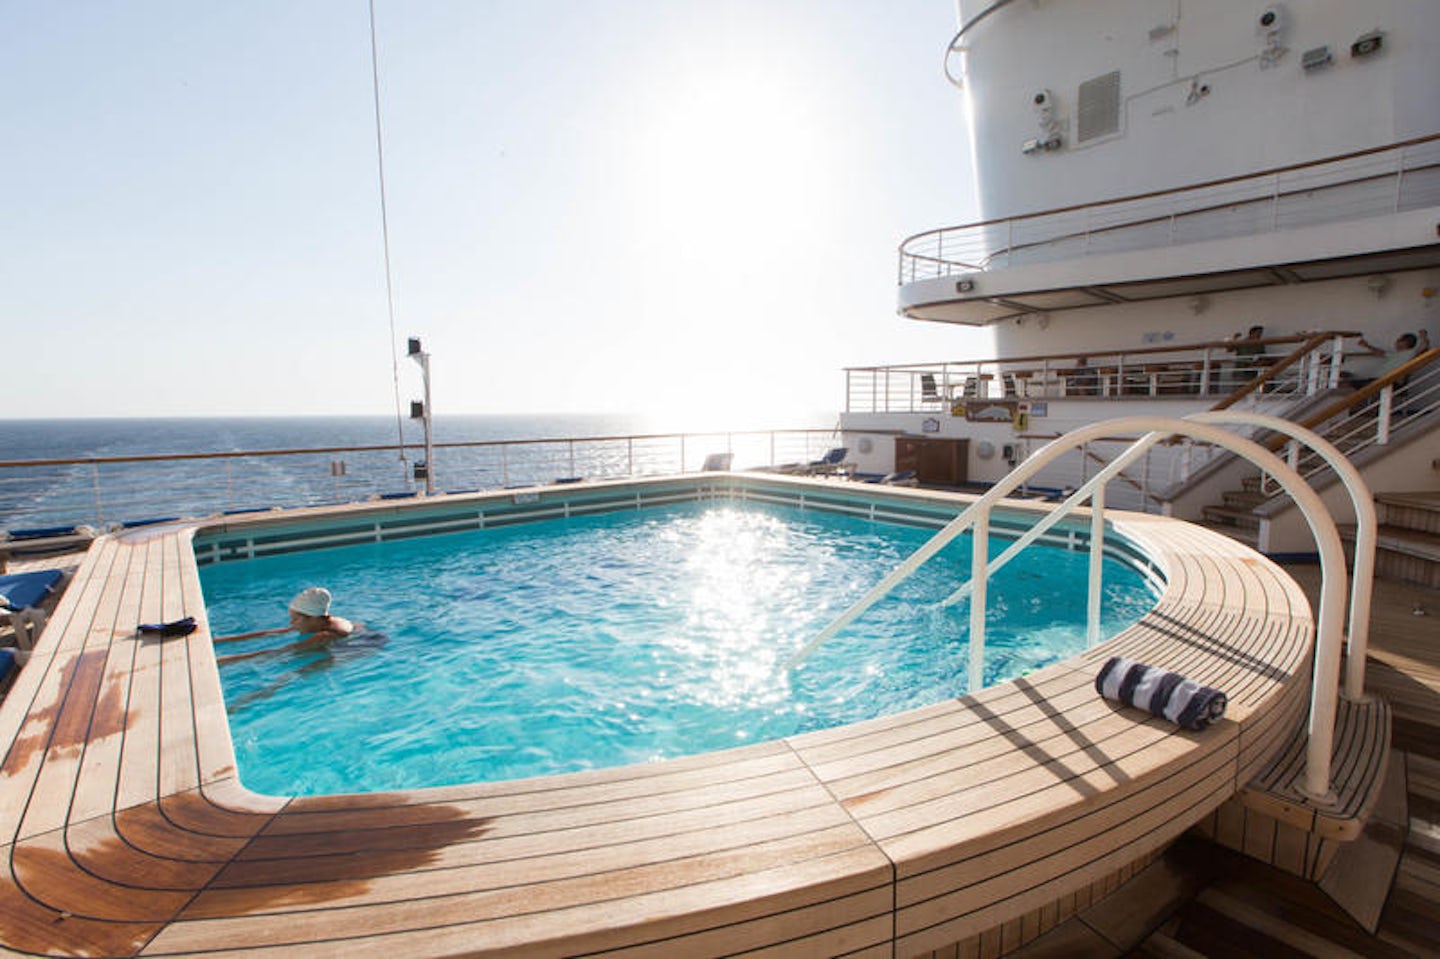 The Terrace Pool on Caribbean Princess